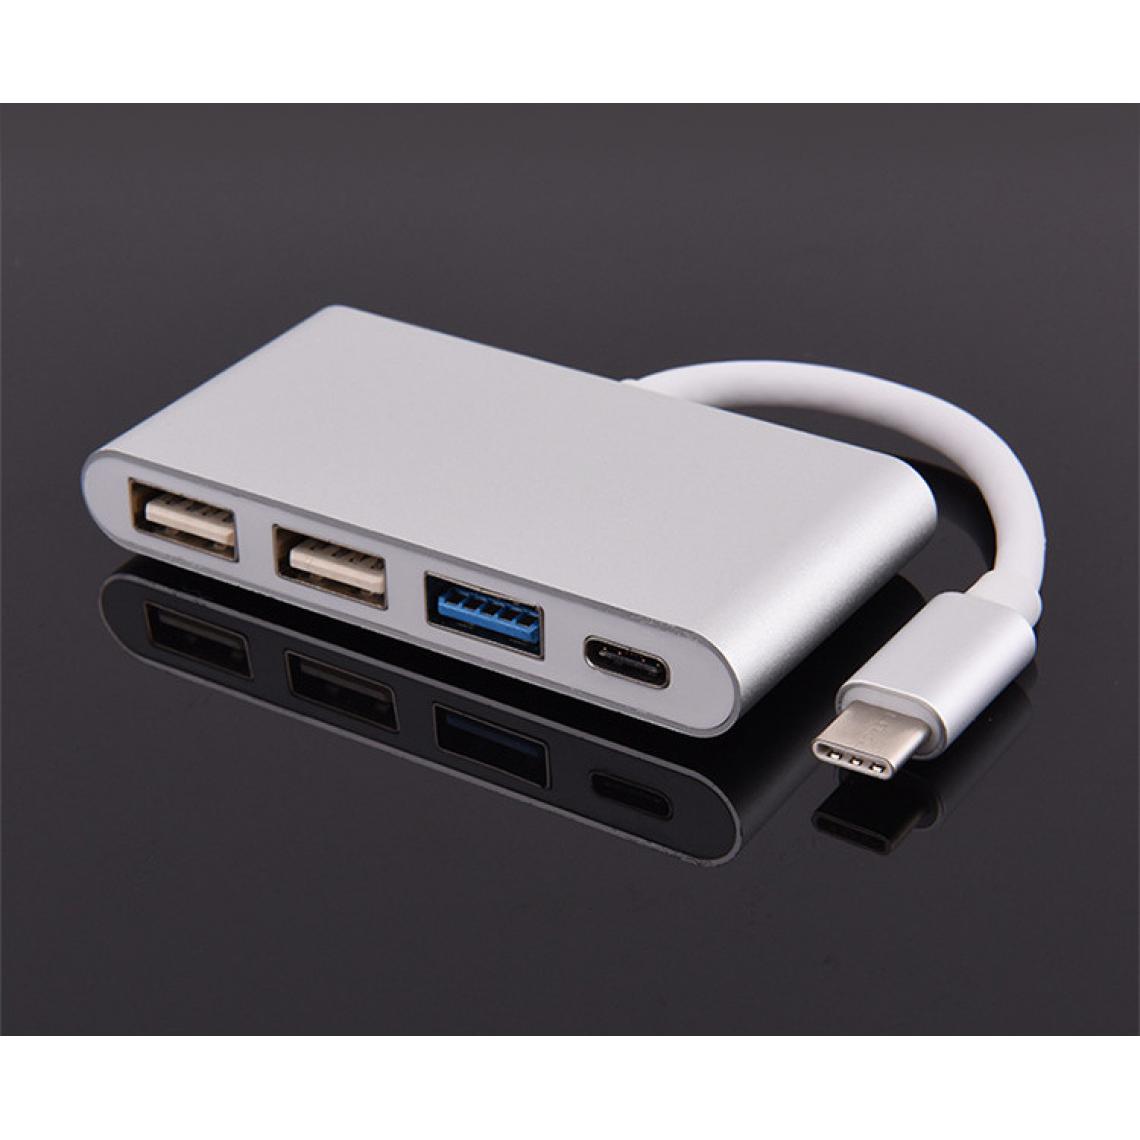 Shot - Multi Adaptateur 4 en 1 Type C pour SONY Xperia XZ Smartphone Hub 2 ports USB 2.0 1 Port USB 3.0 (ARGENT) - Hub